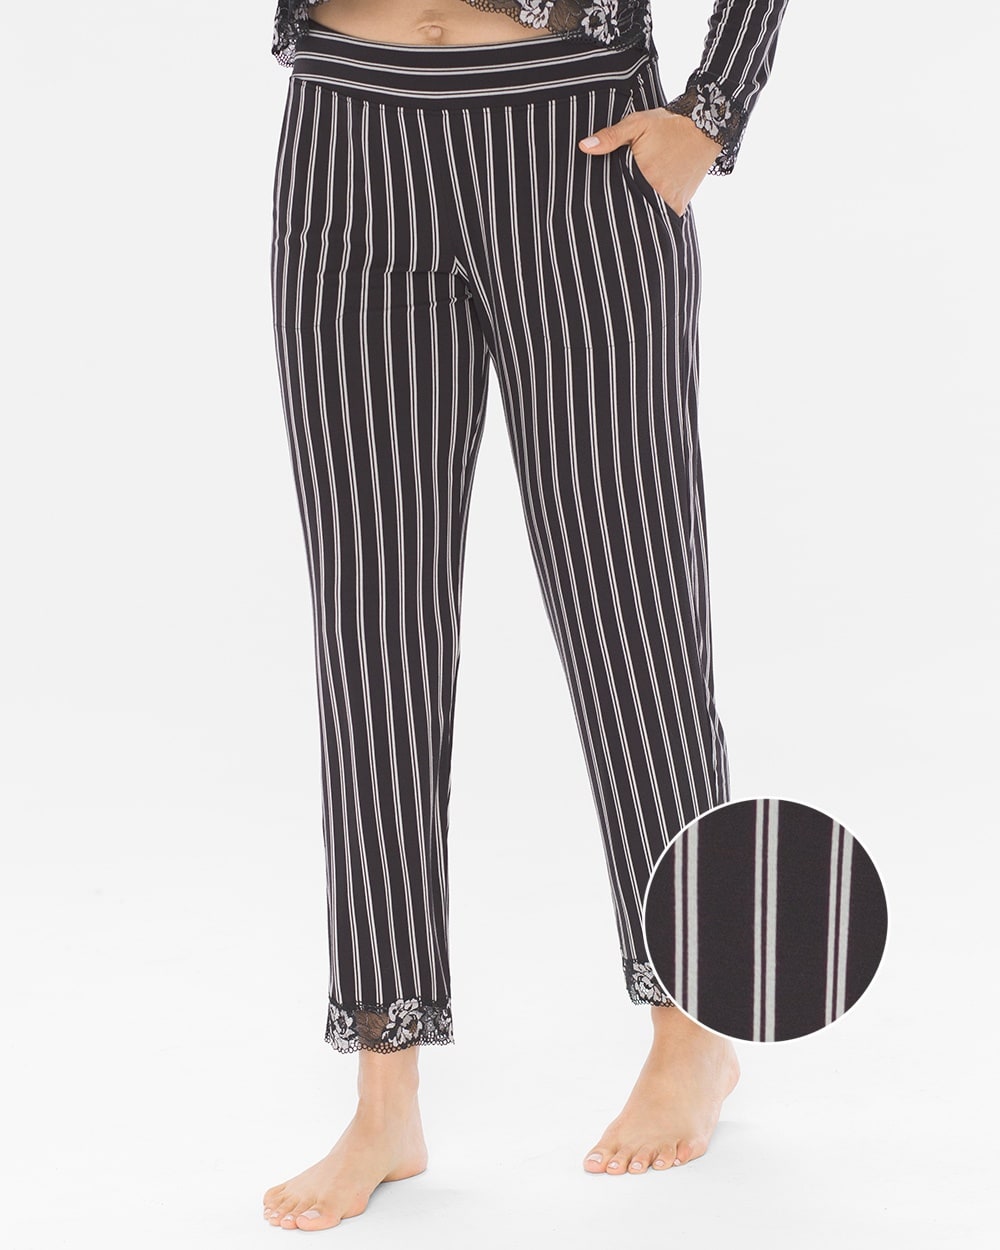 Cool Nights Signature Lace Ankle Pajama Pants Glorious Stripe Black